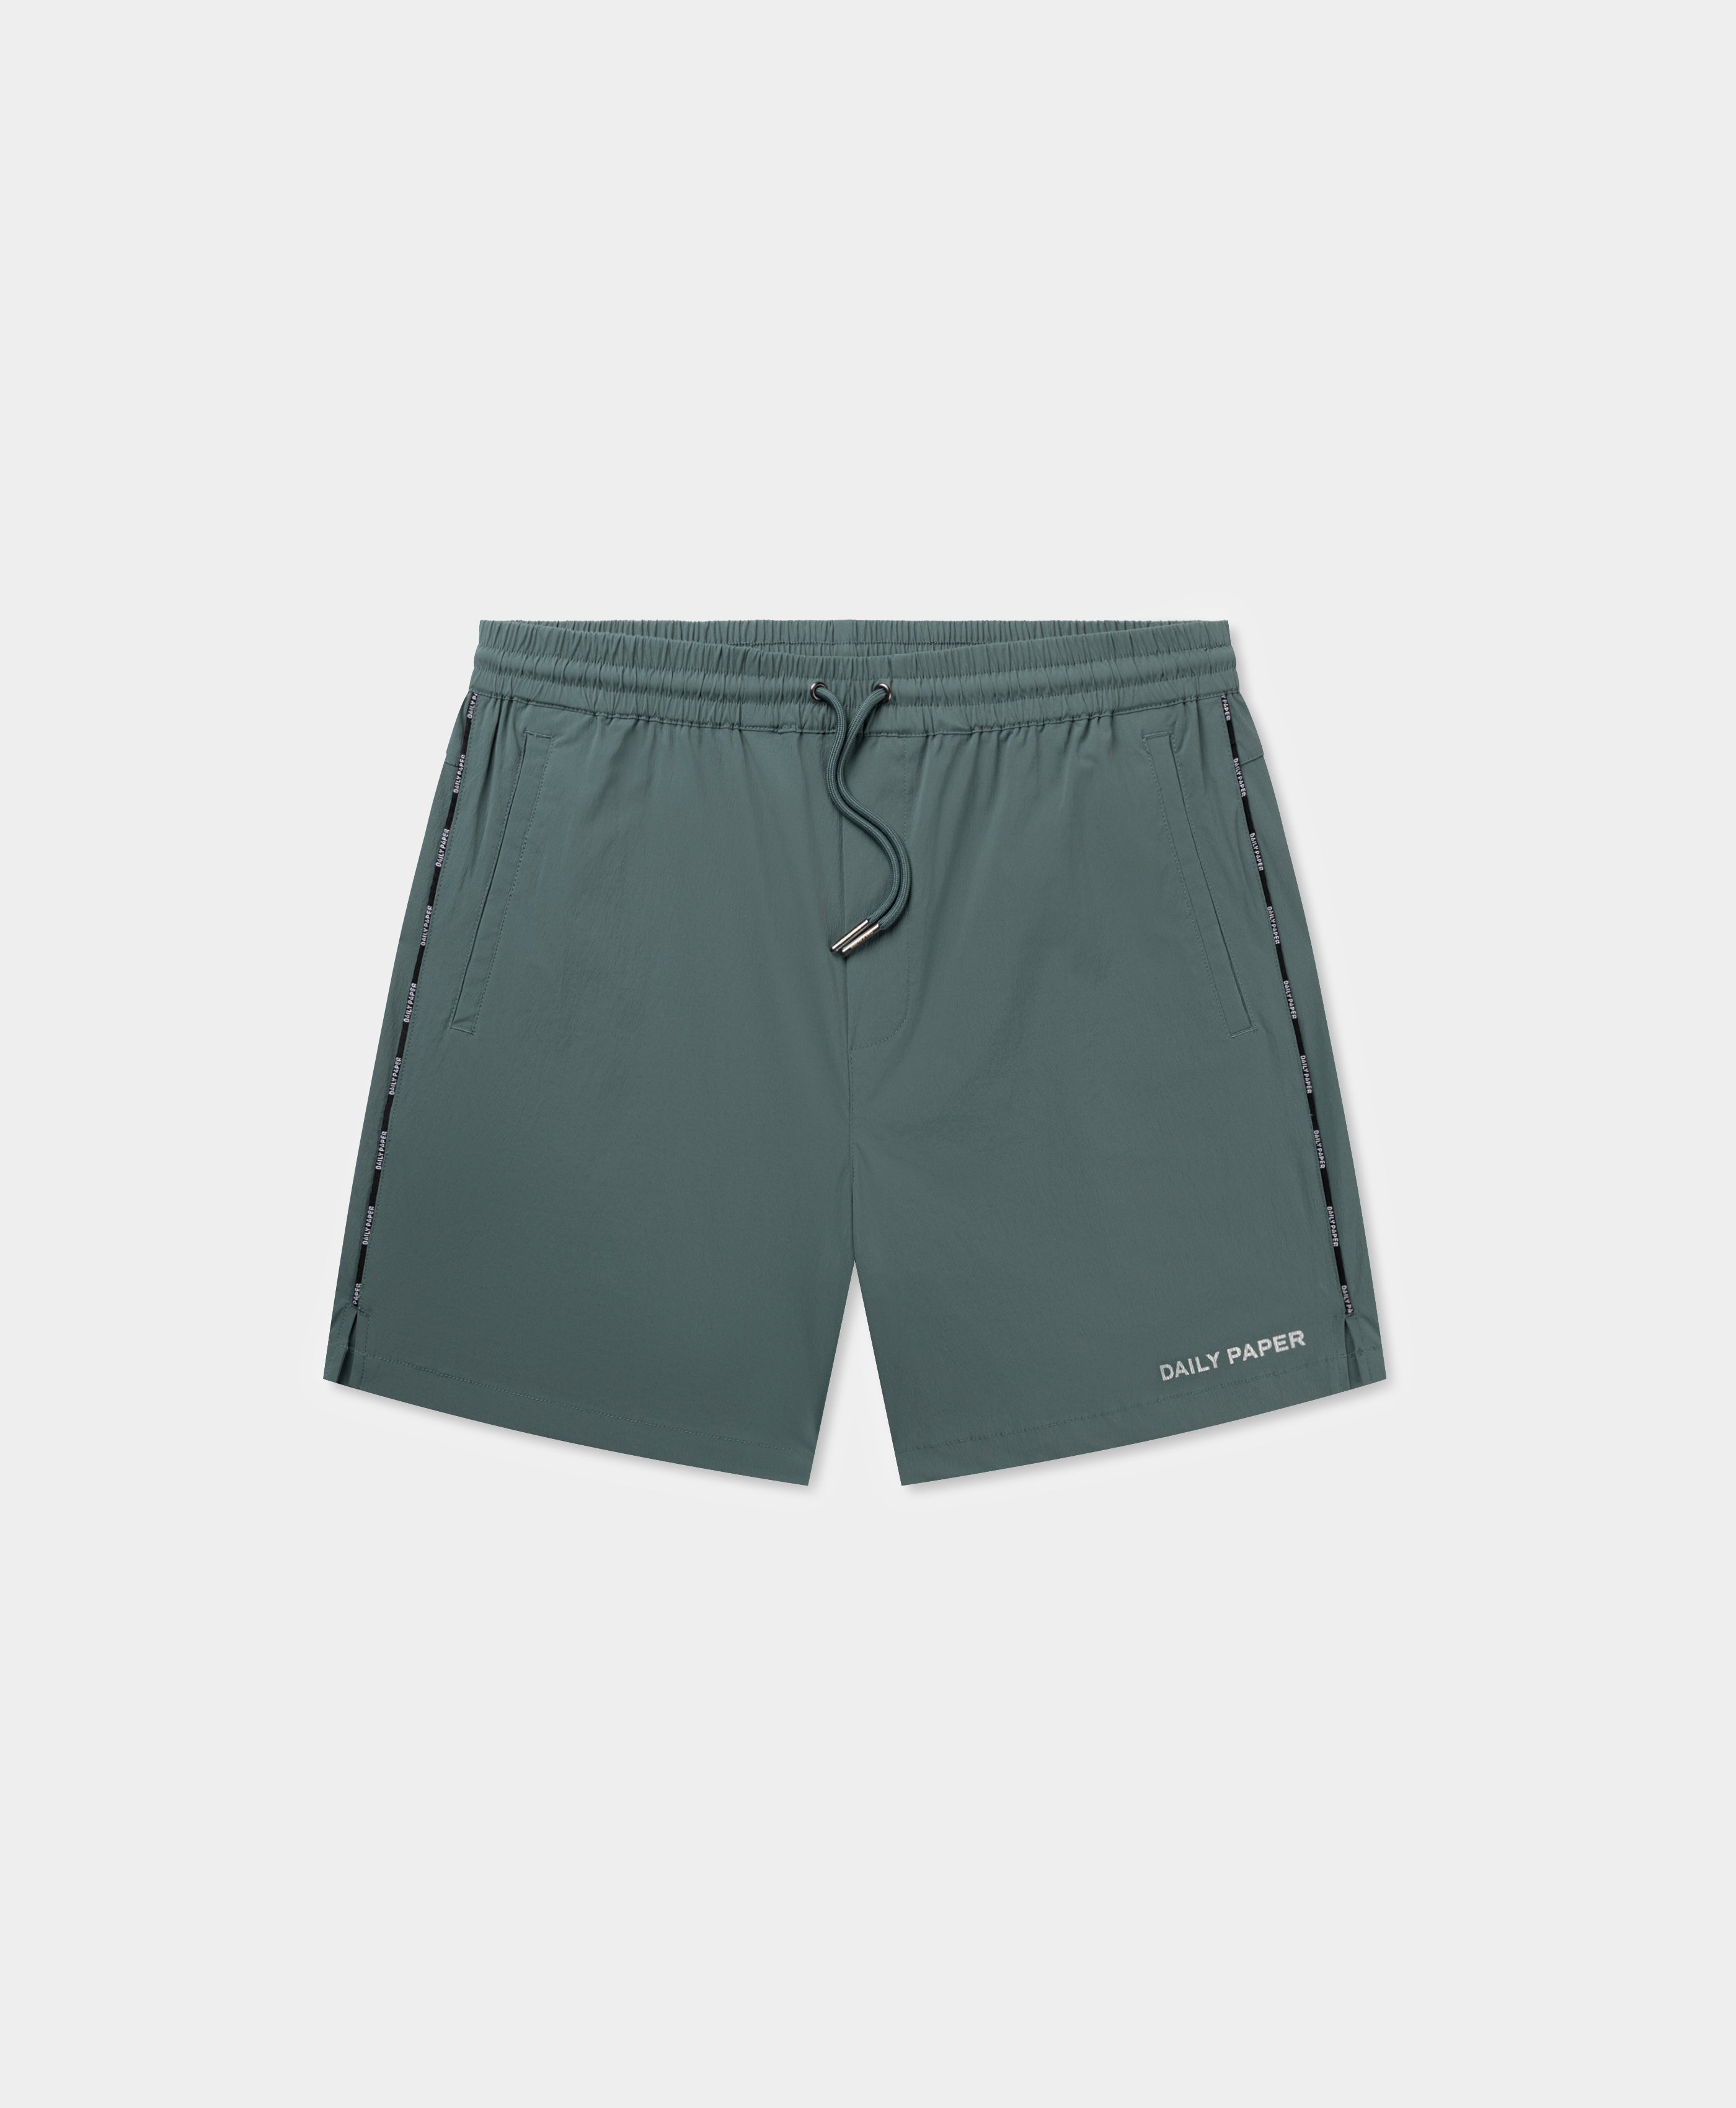 DP - Silver Green Mehani Shorts - Packshot - Front